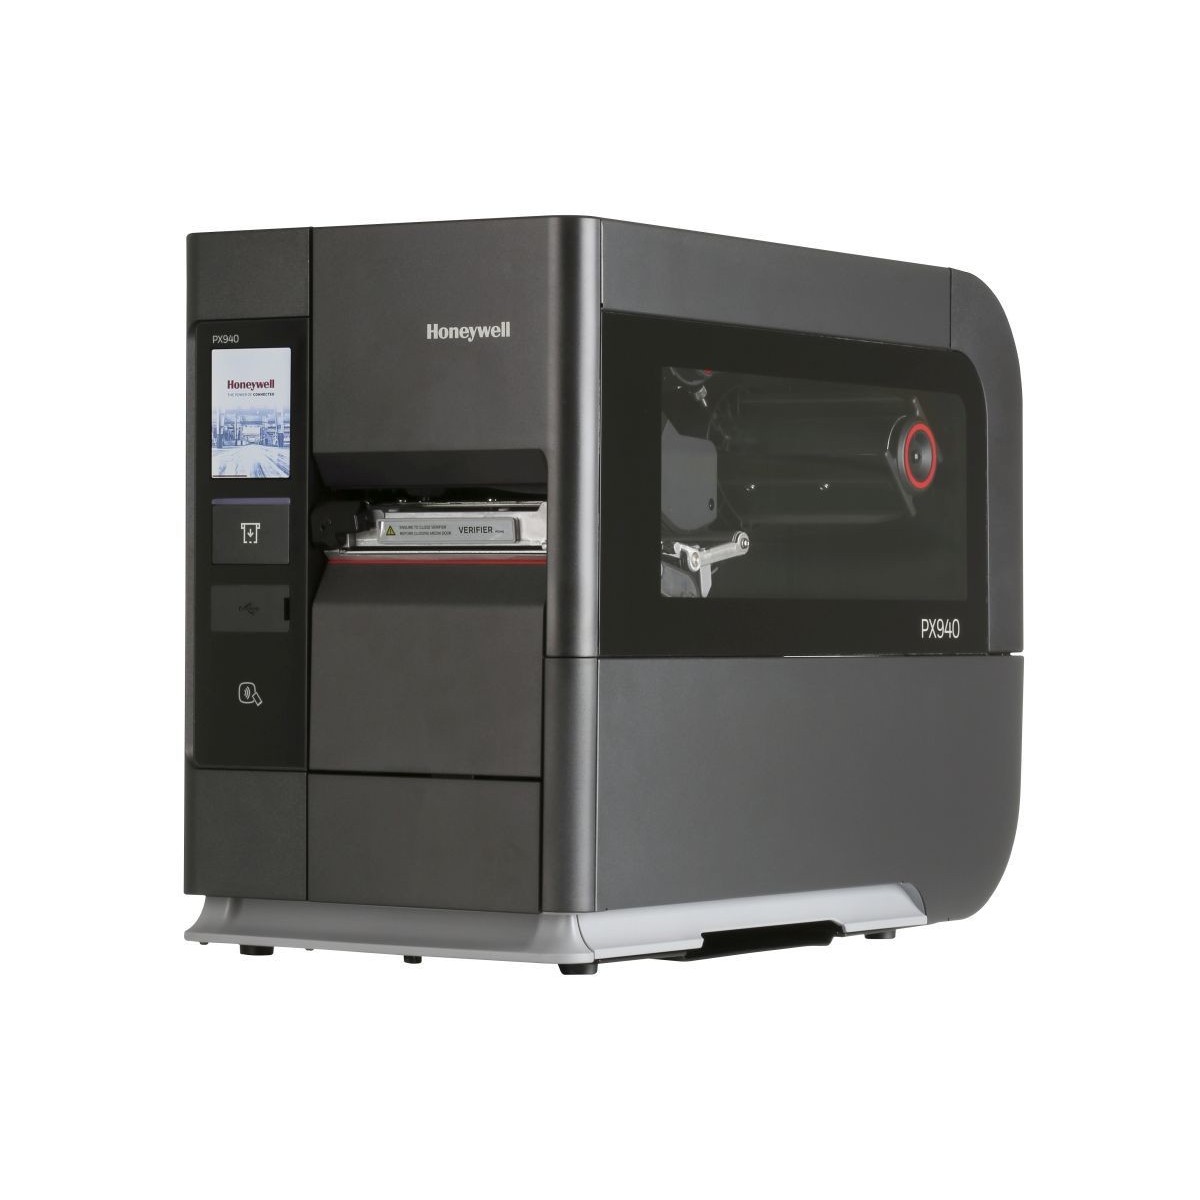 HONEYWELL PX900 NO Verifier HIGH PERF TT - Label Printer - Label Printer